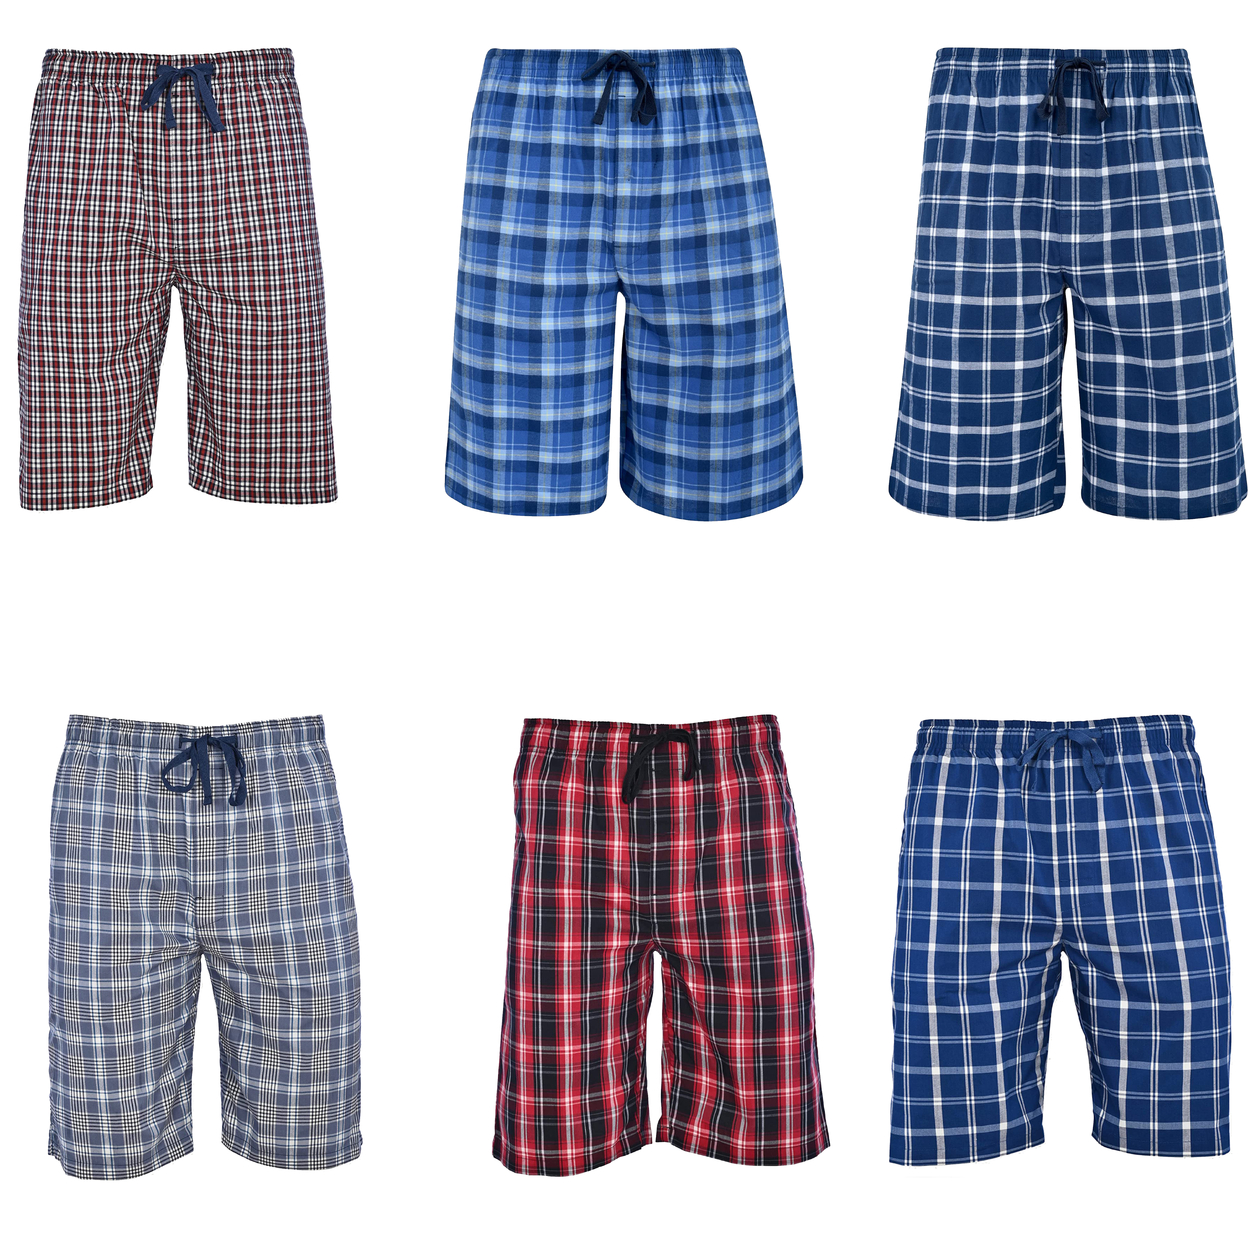 2-Pack: Men's Ultra Soft Plaid Lounge Pajama Sleep Wear Shorts - Red & Tan, Large